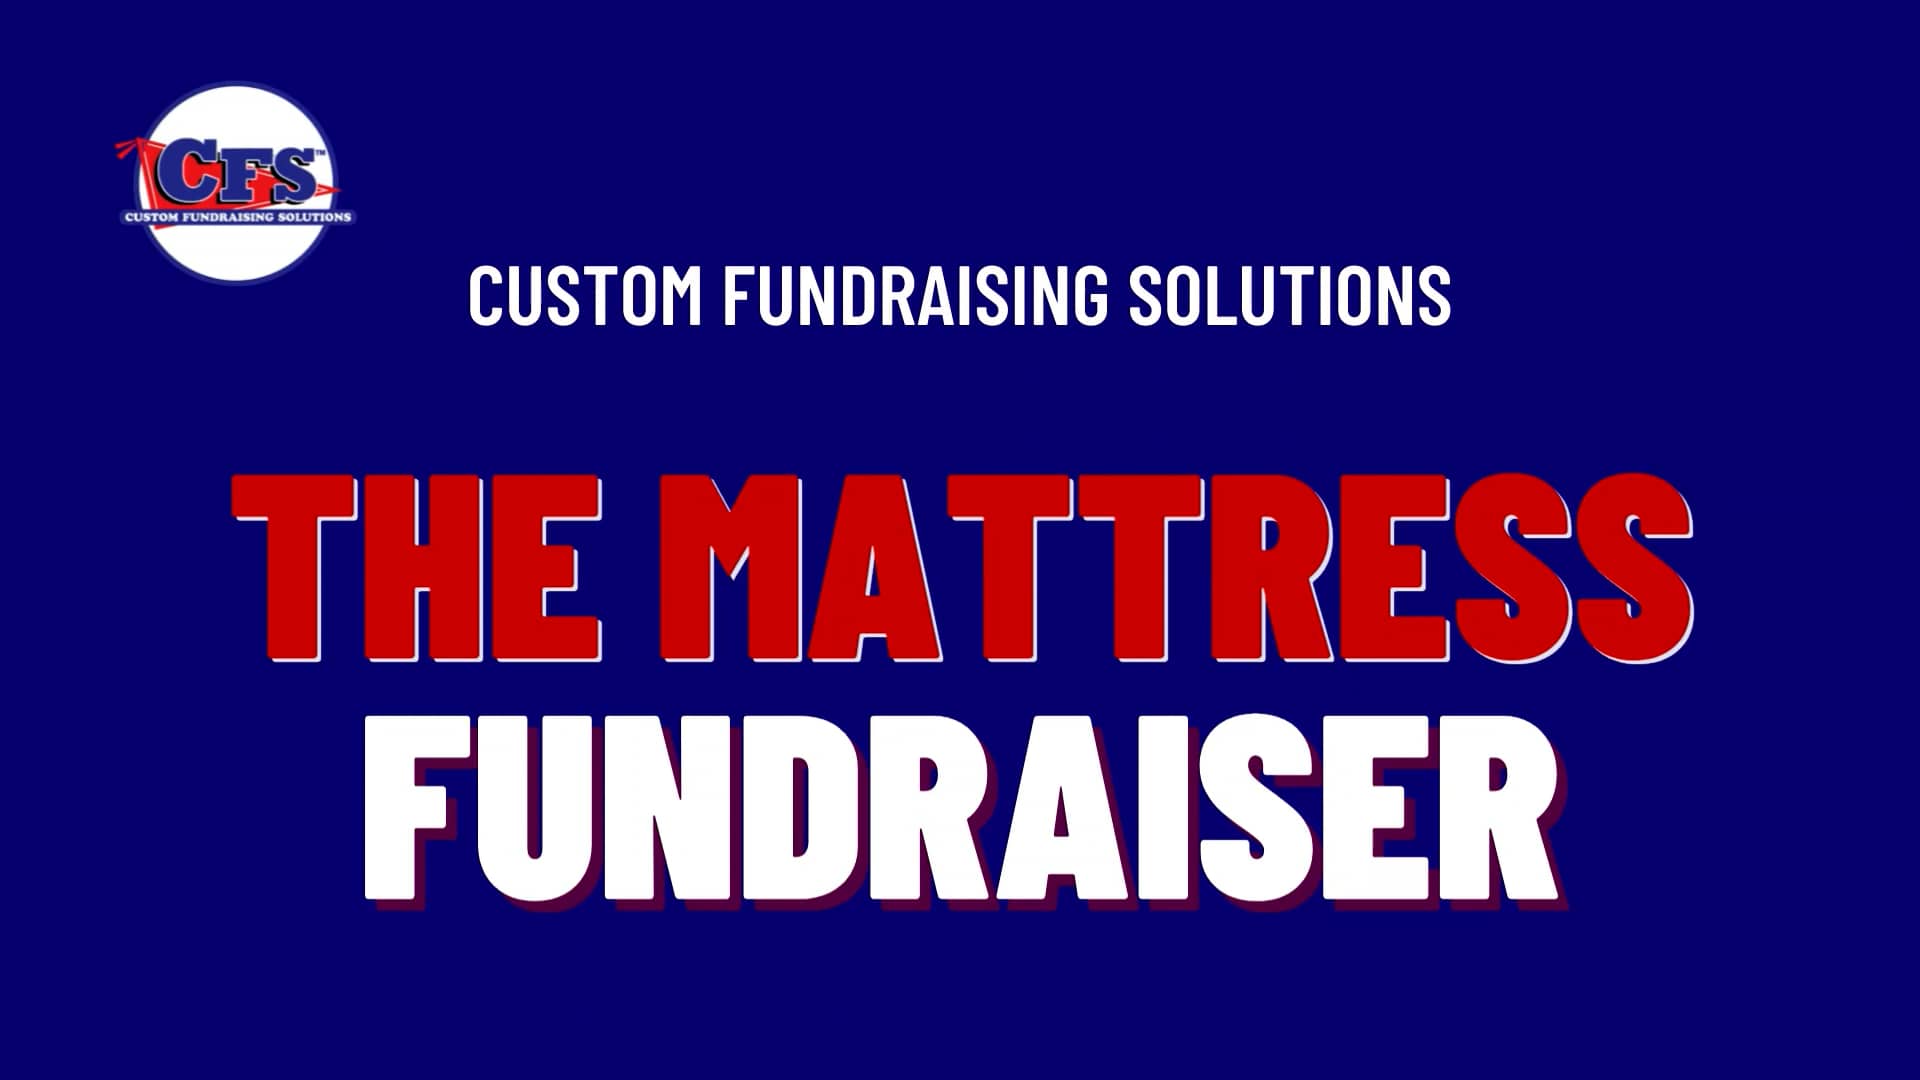 cfs mattress fundraiser prices